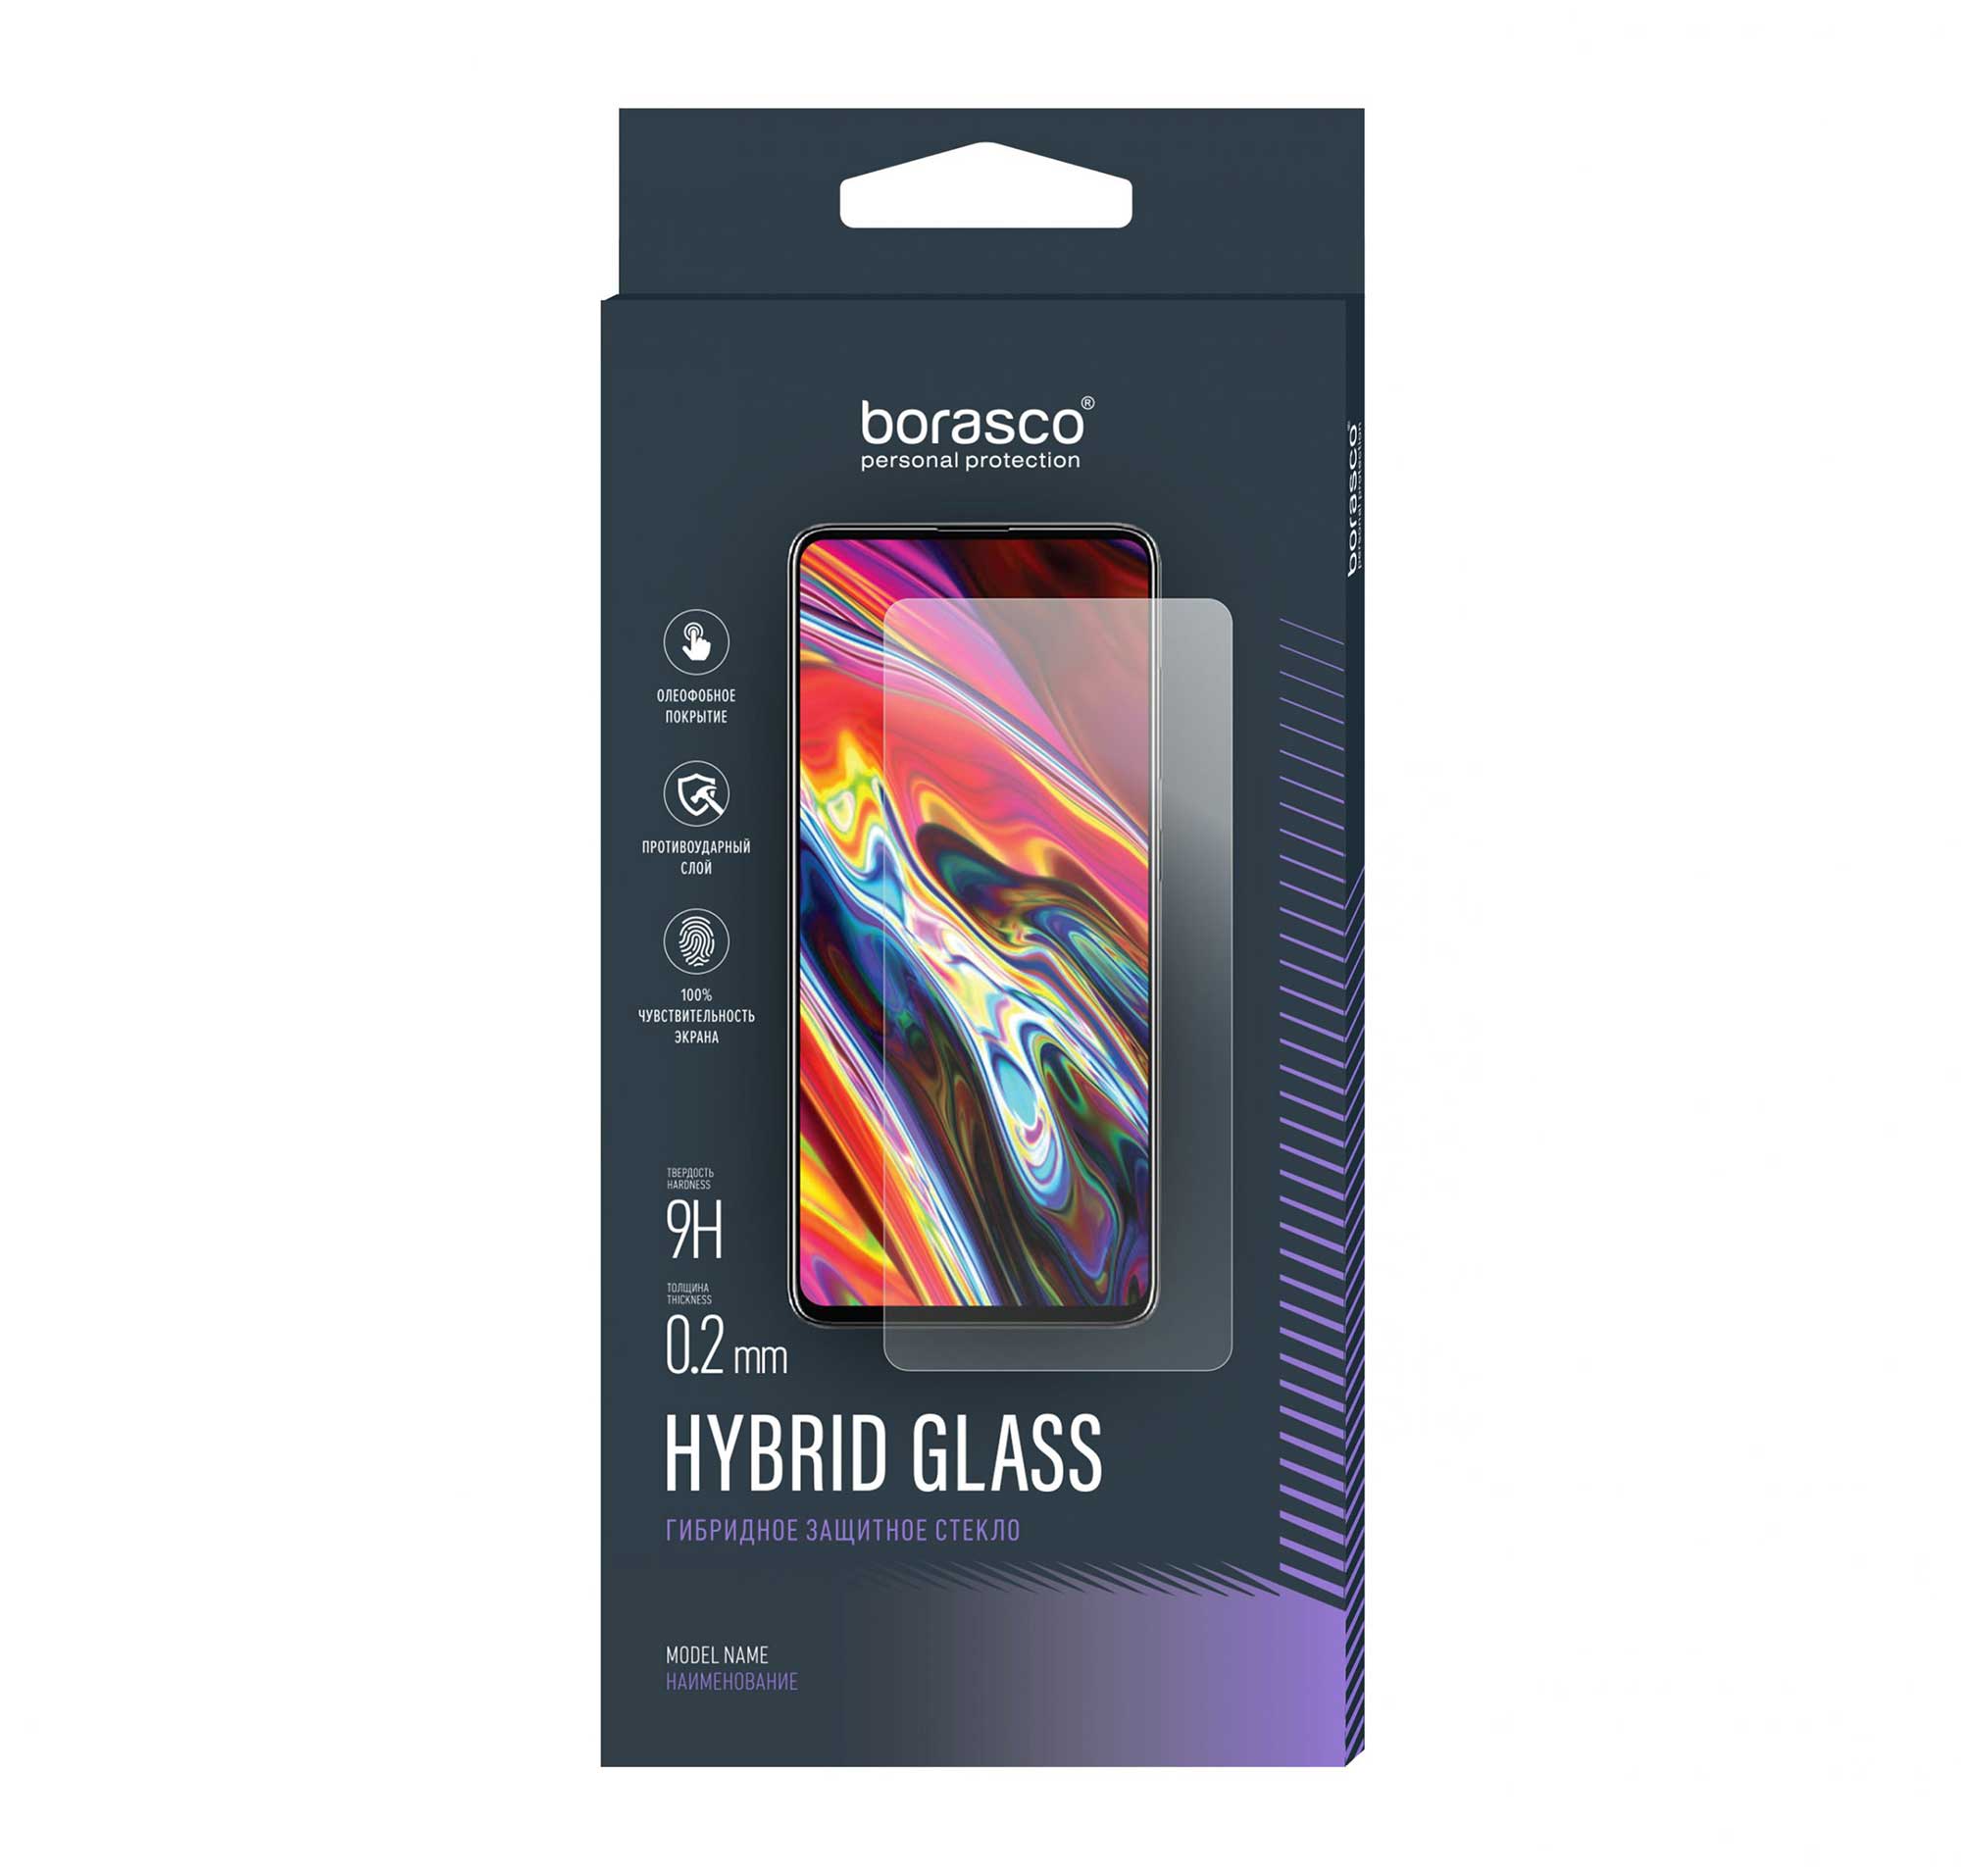 Защитное стекло Hybrid Glass для Itel A25 чехол mypads алладин тень для itel a25 itel a25 pro itel a35 задняя панель накладка бампер